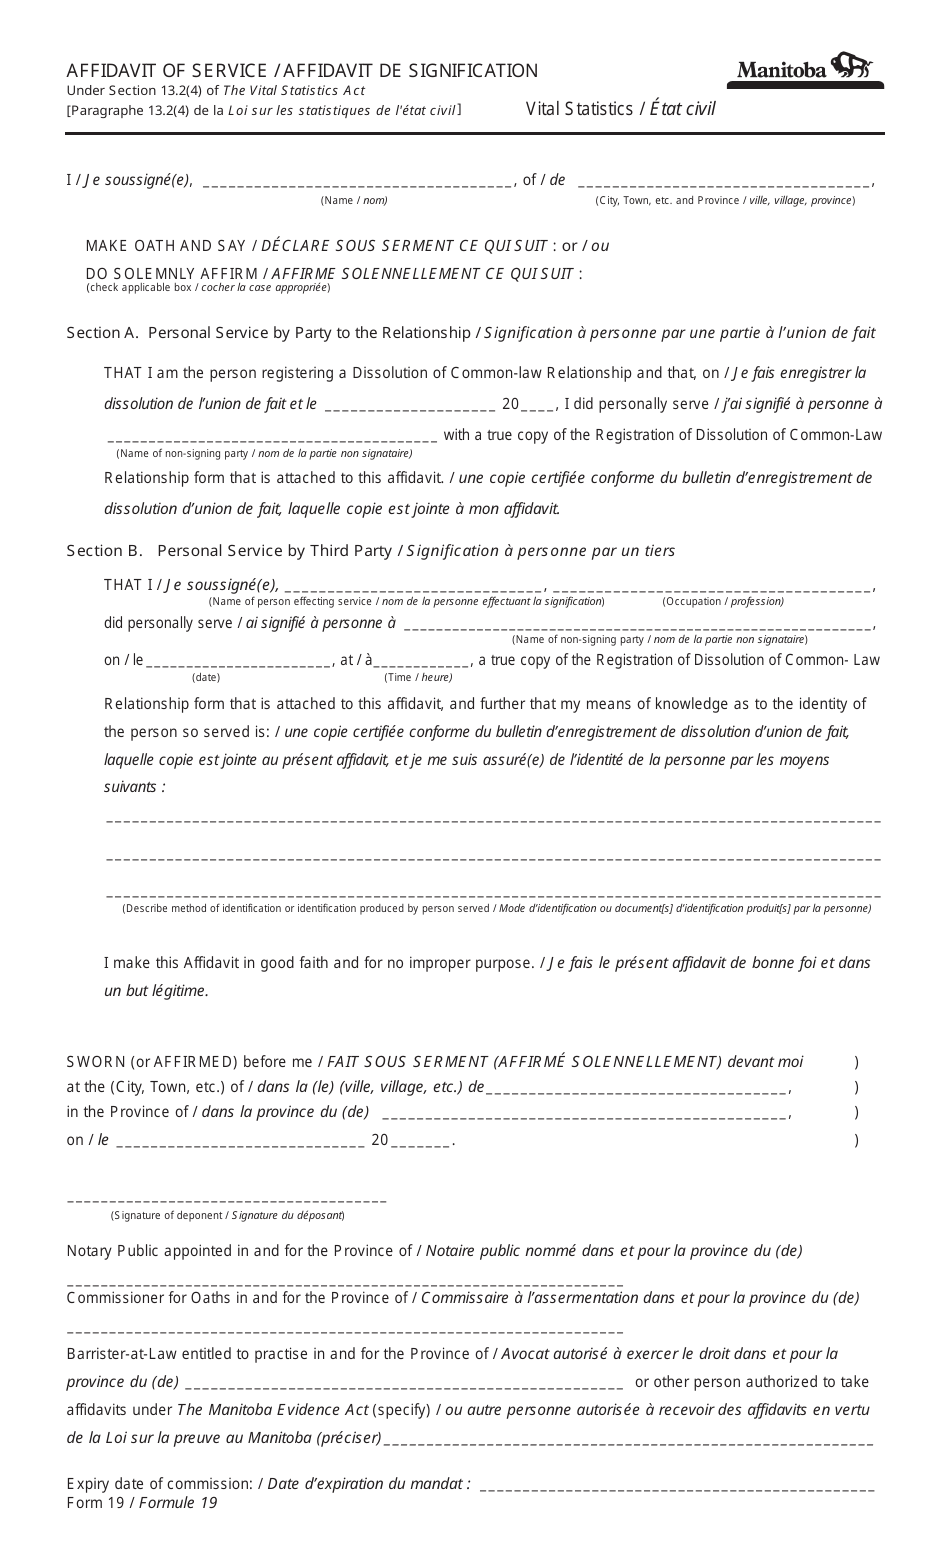 Form 19 Affidavit of Service - Manitoba, Canada (English / French), Page 1